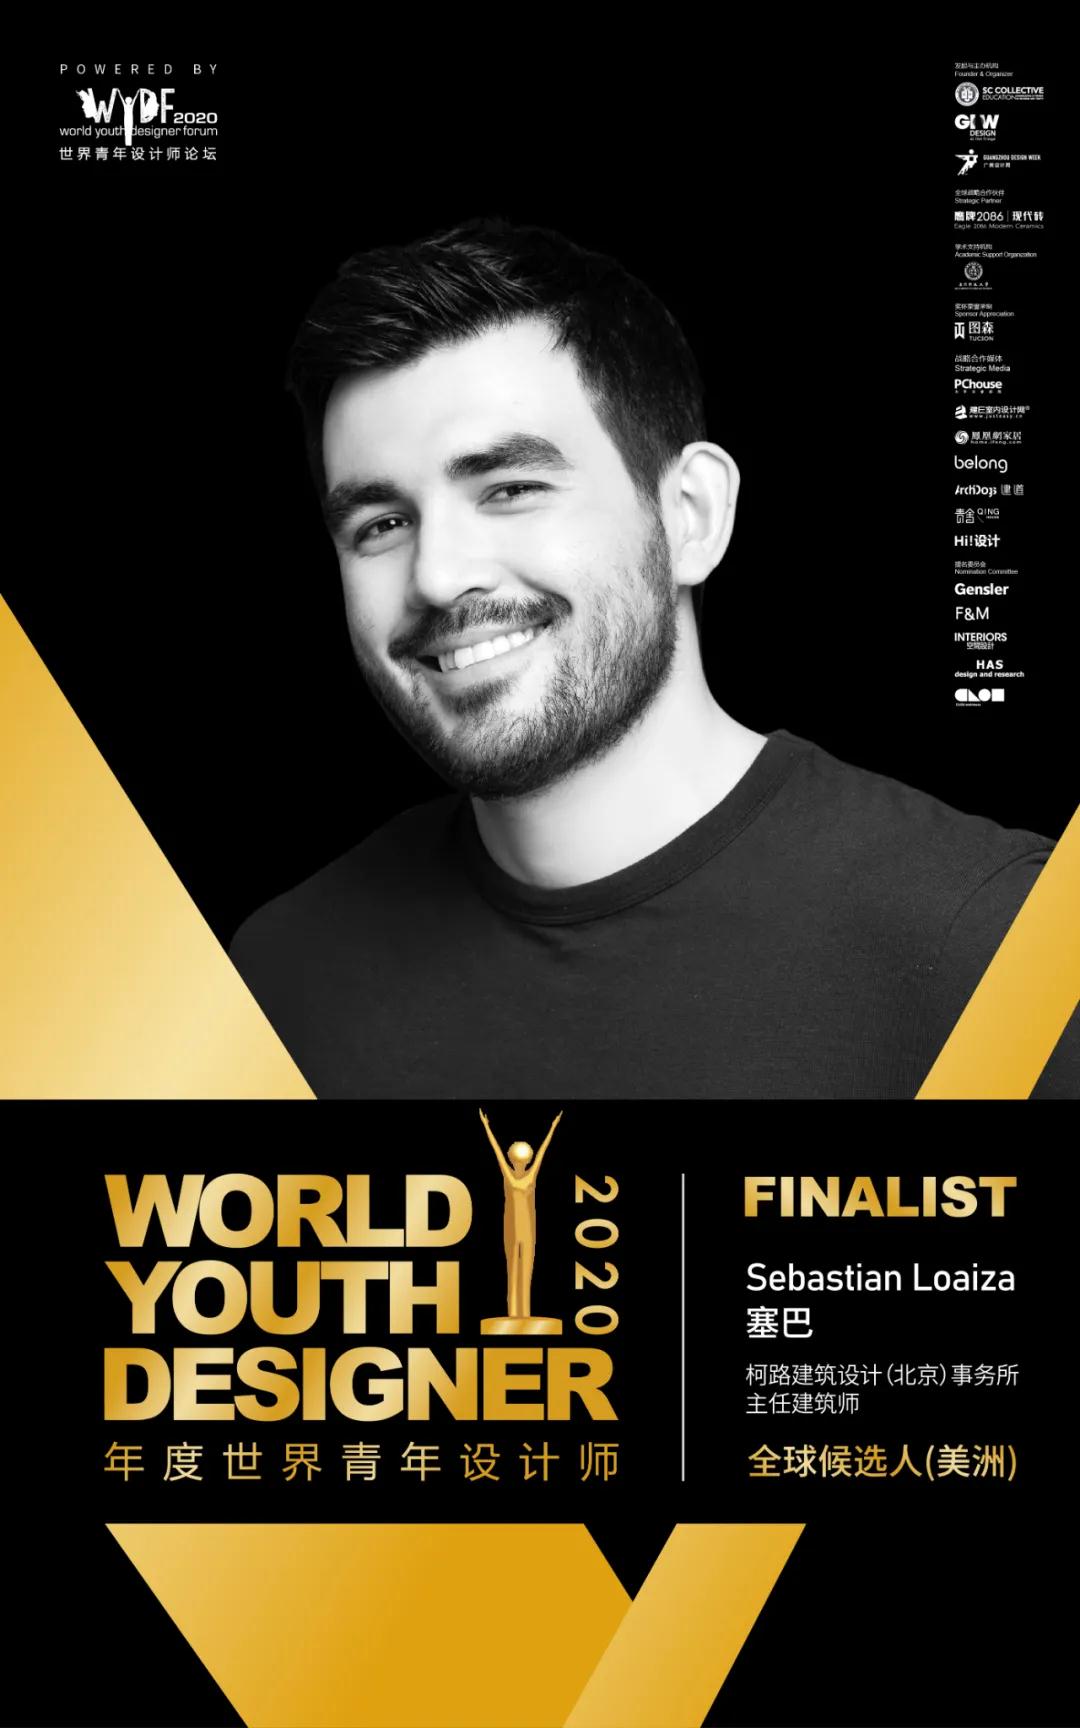 WYDF年度评选全球美洲候选人——鬼才建筑设计师Sebastian Loaiza